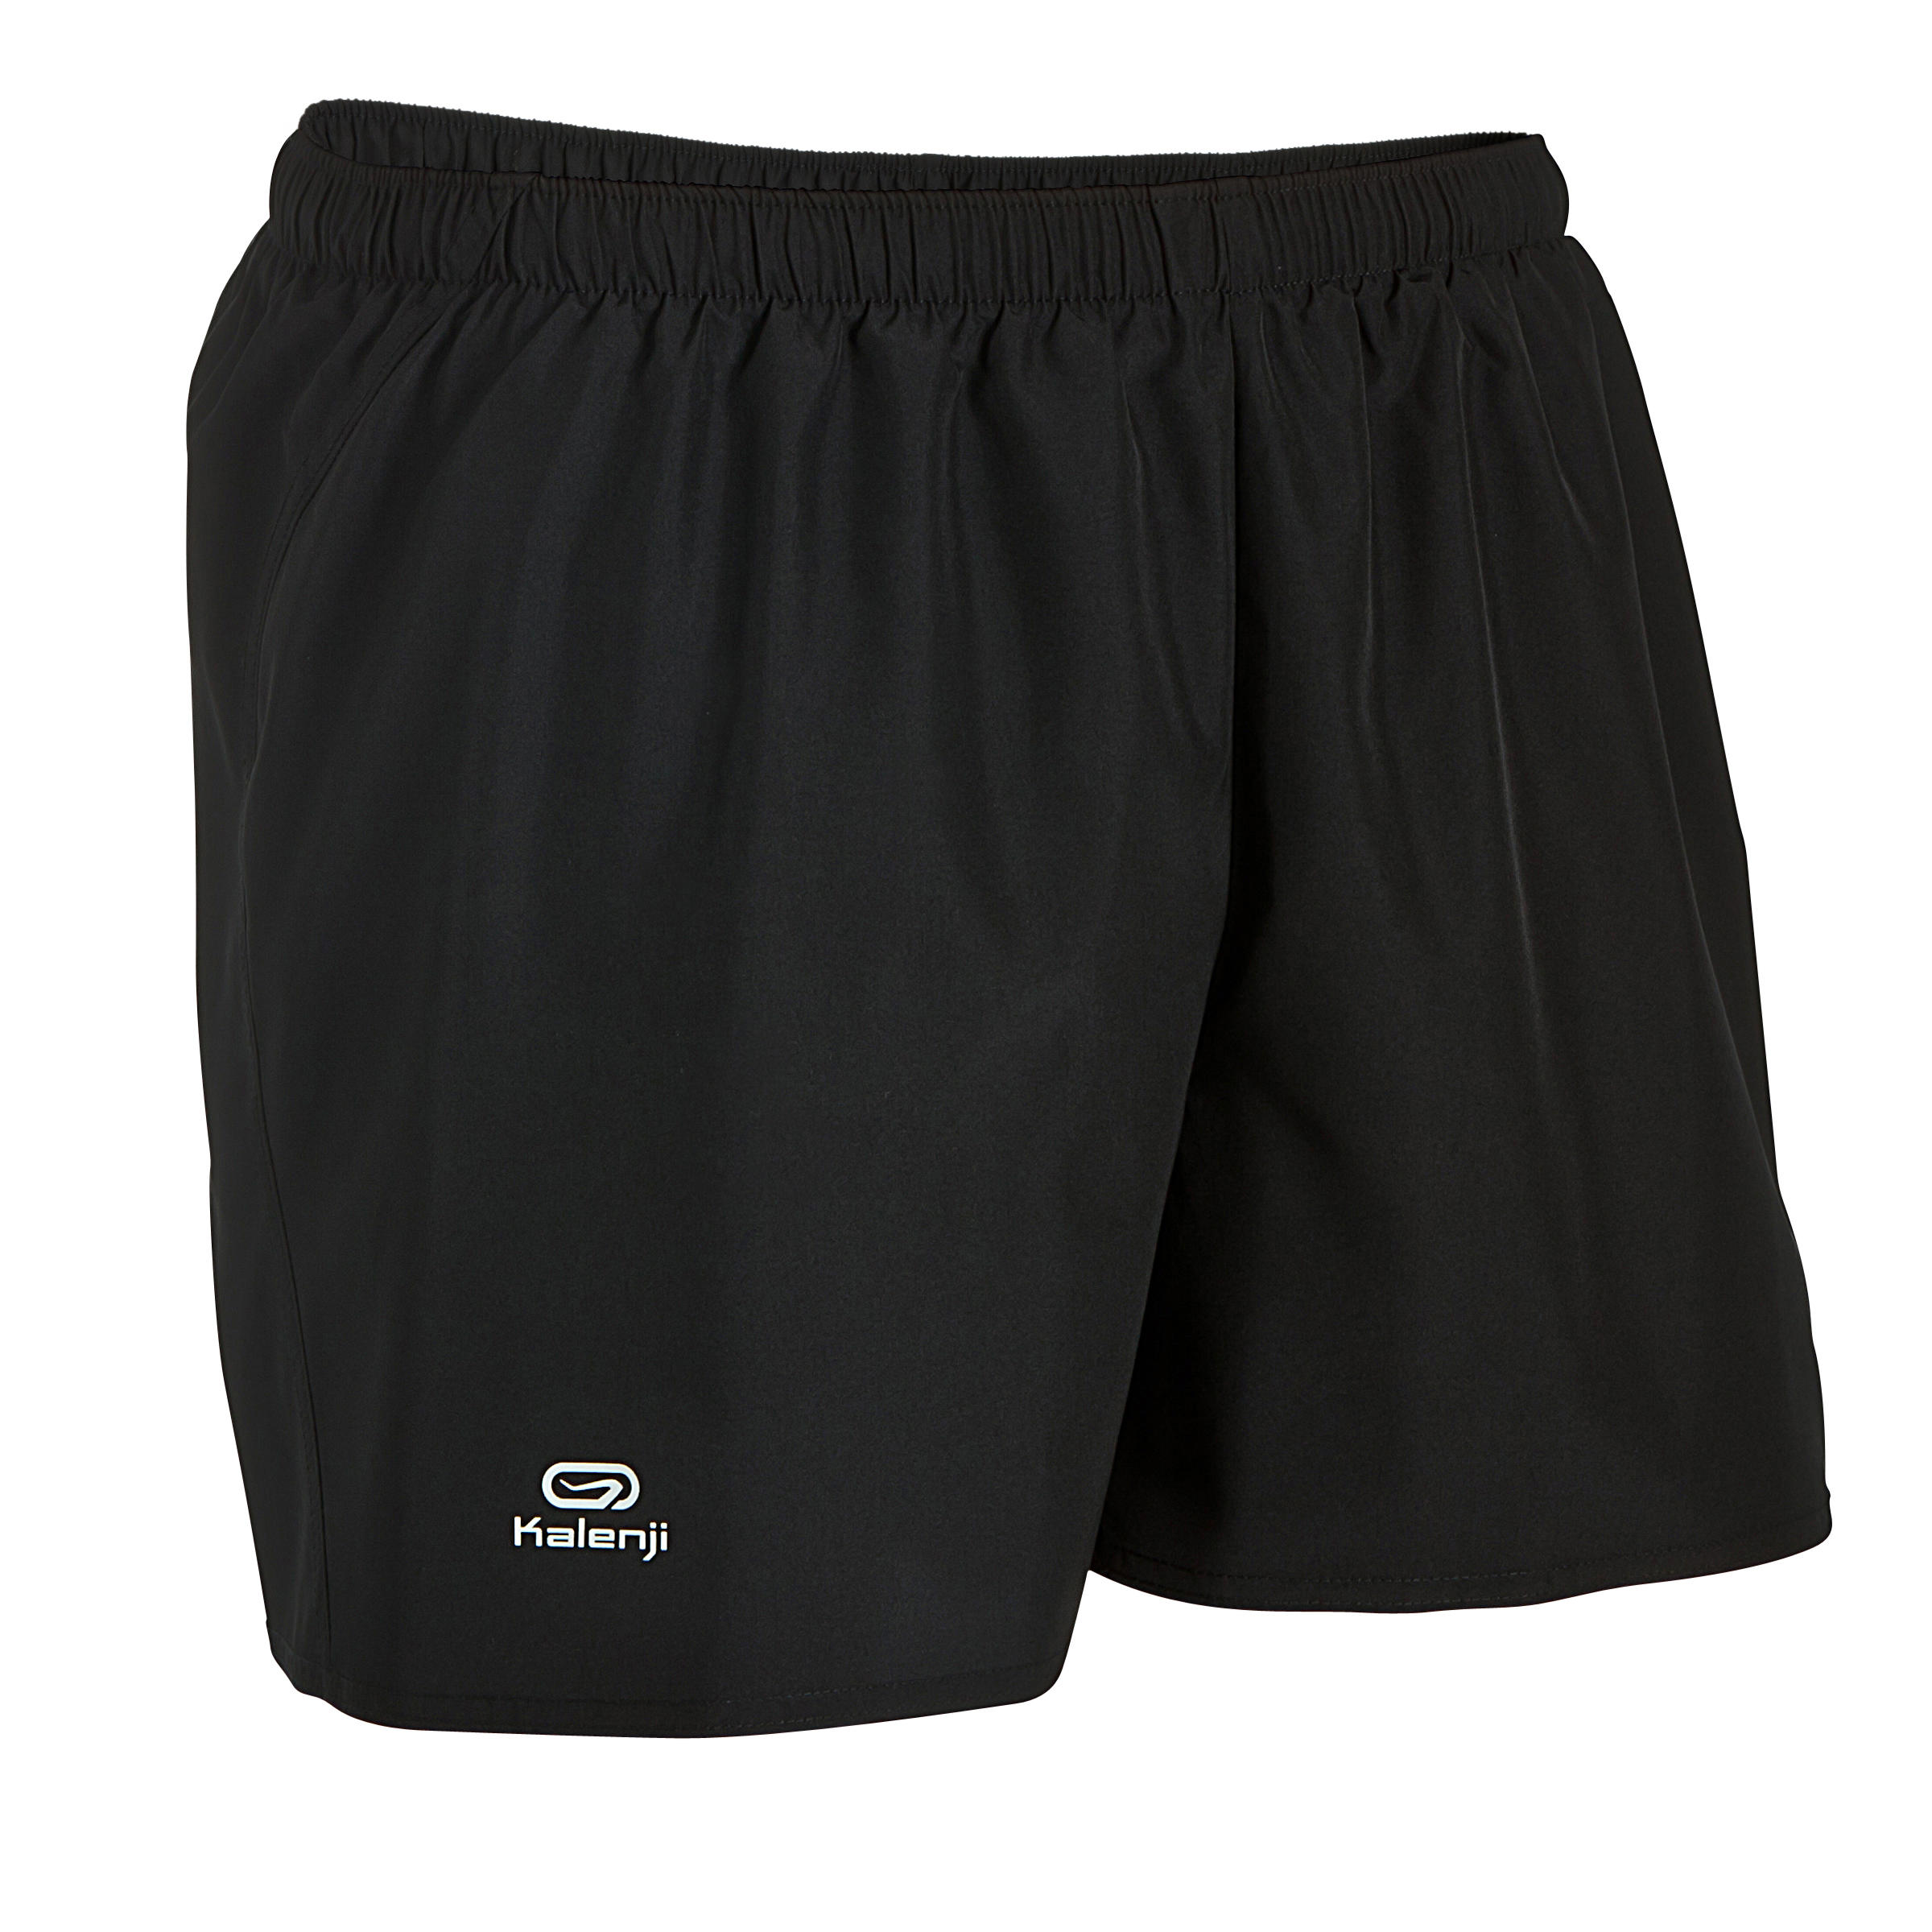 decathlon shorts online